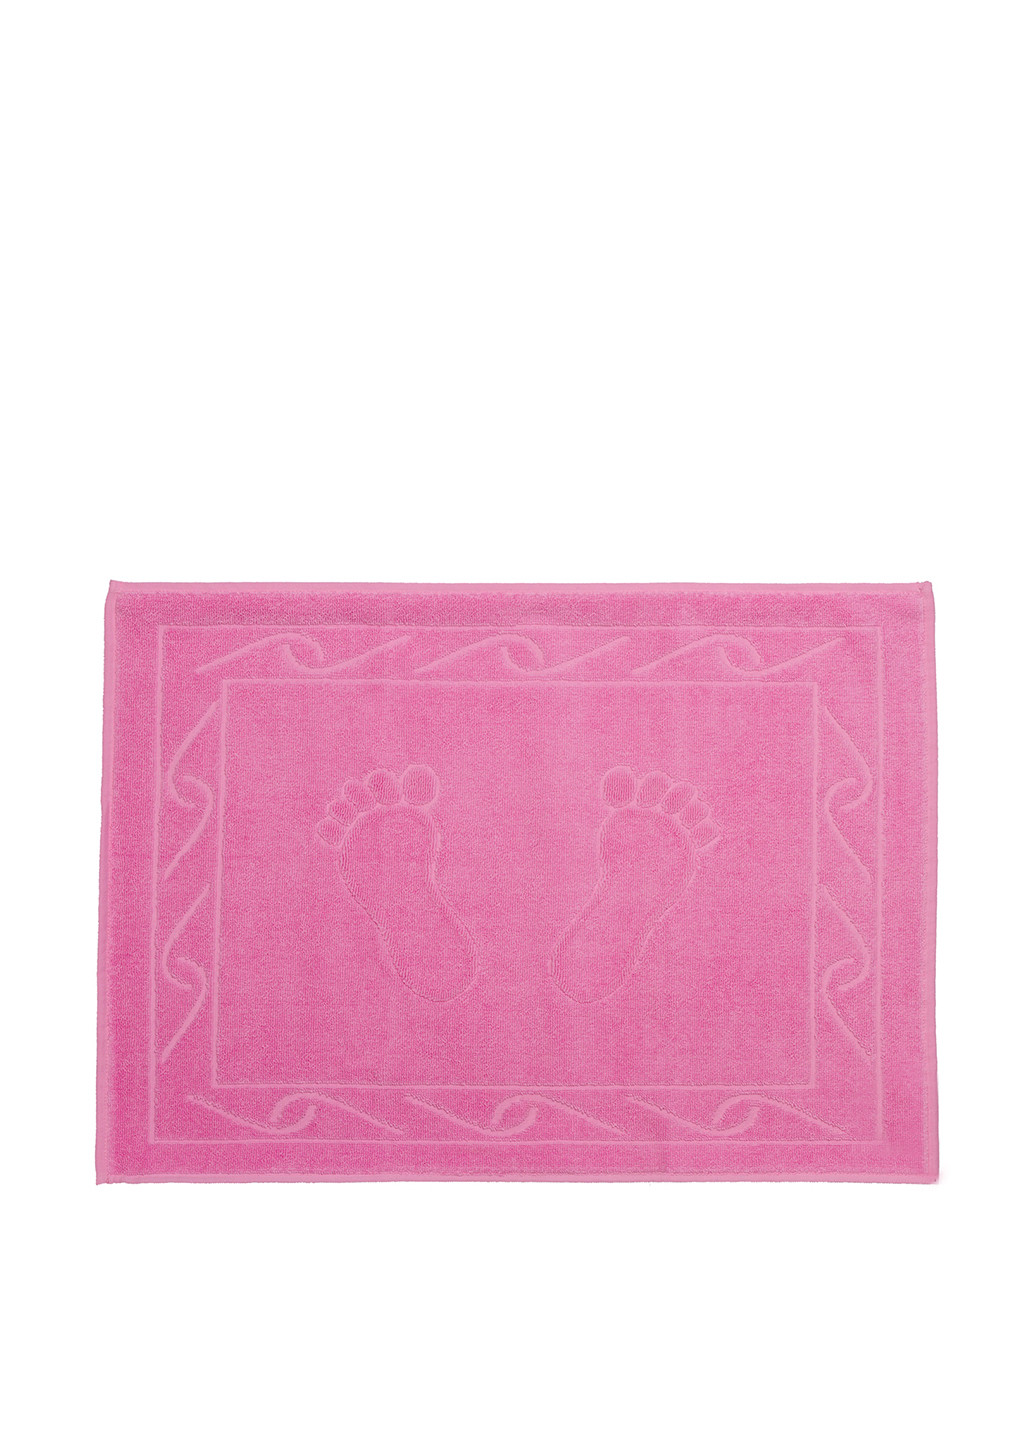 Creative Hobby рушник, 50х70 см фактура рожевий виробництво - Туреччина